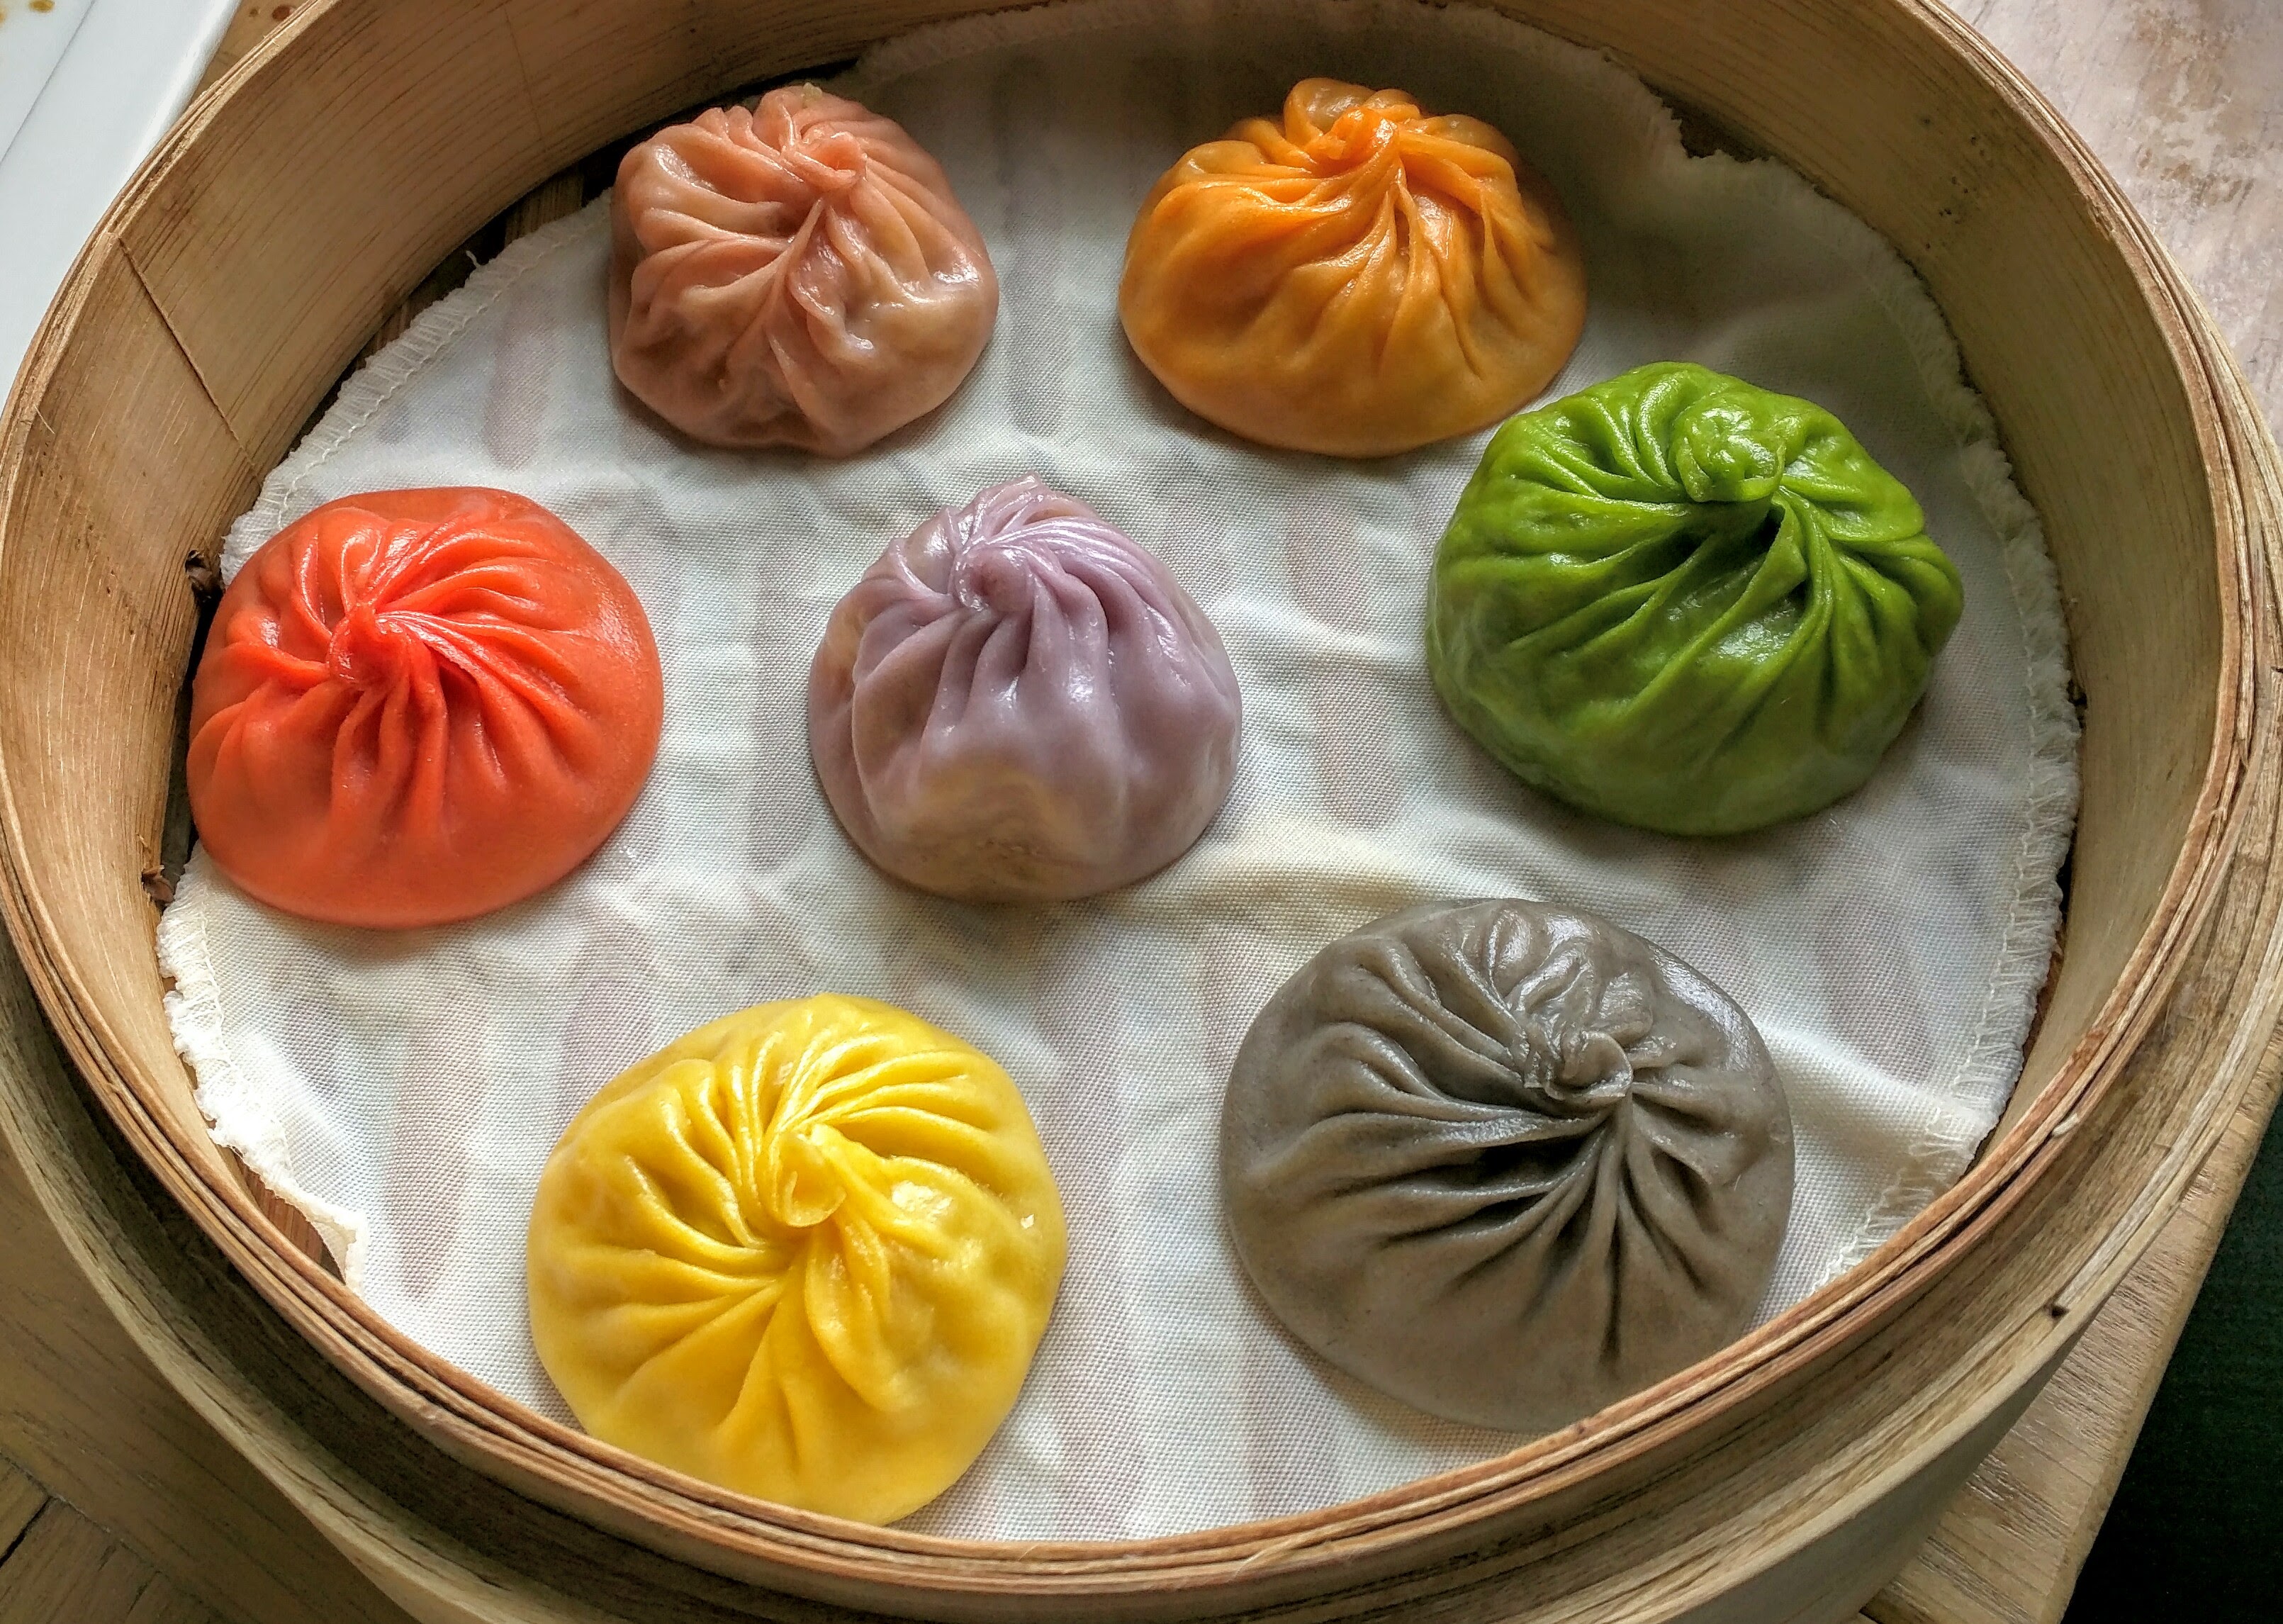 Colourful Dumplings at Din Tai Fung